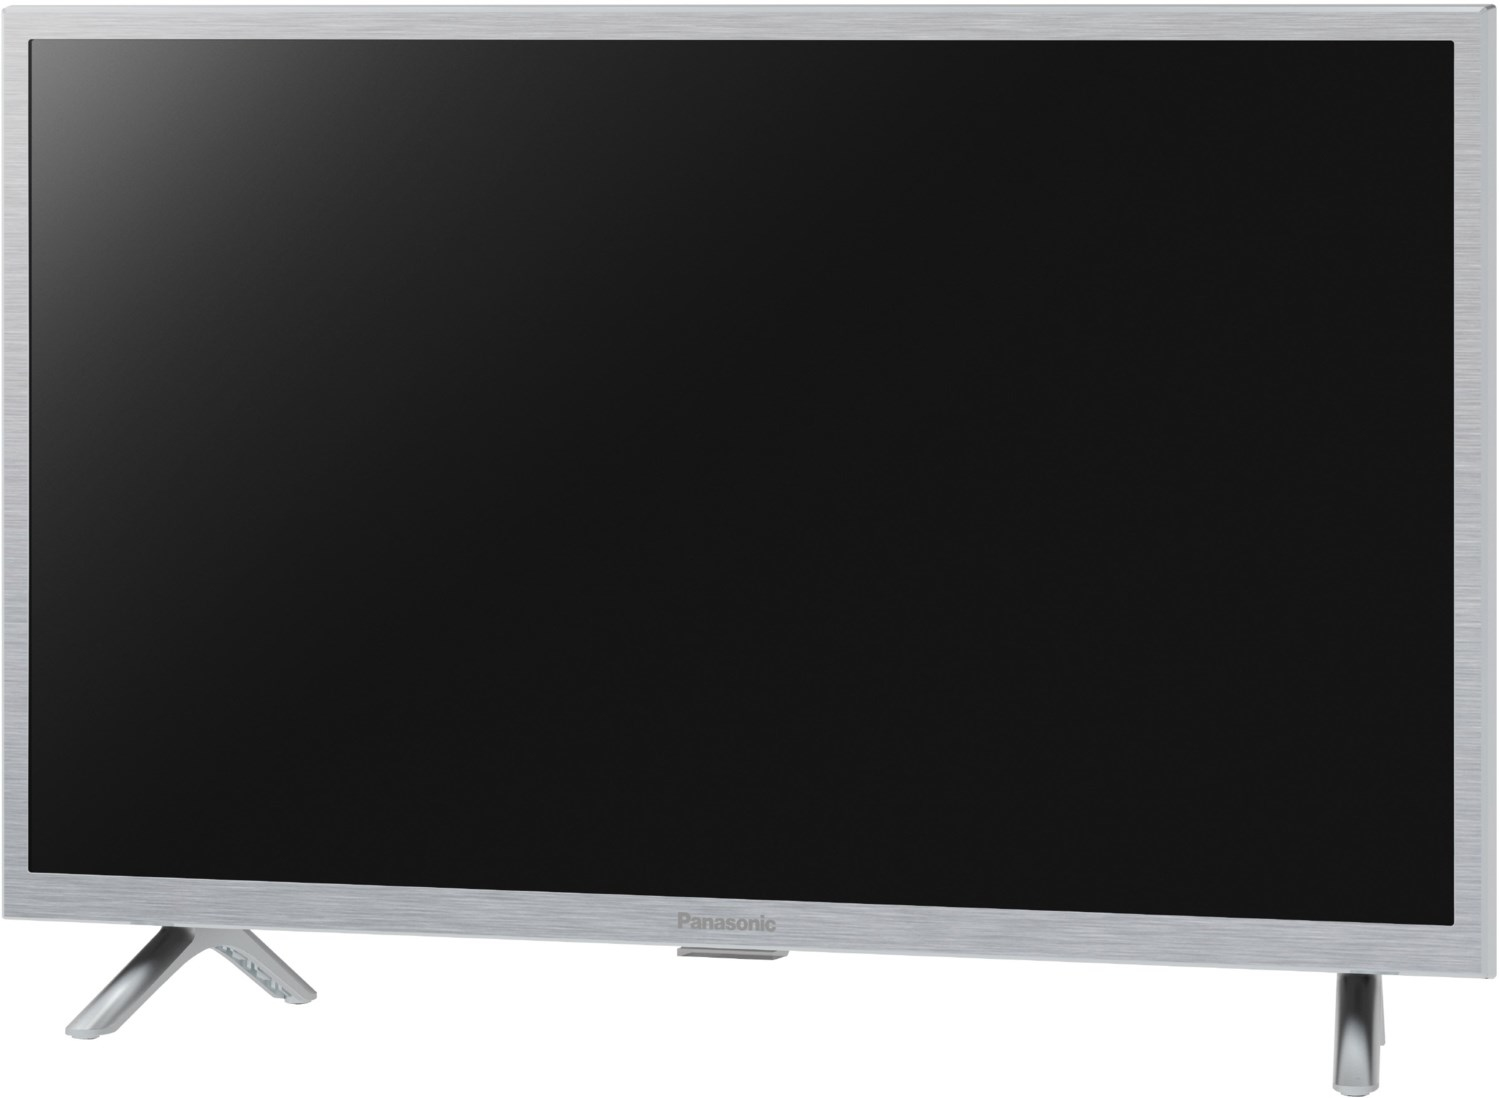 Panasonic TX-24LSW504S - 60 cm (24") Diagonalklasse LSW504 Series LCD-TV mit LED-Hintergrundbeleuchtung